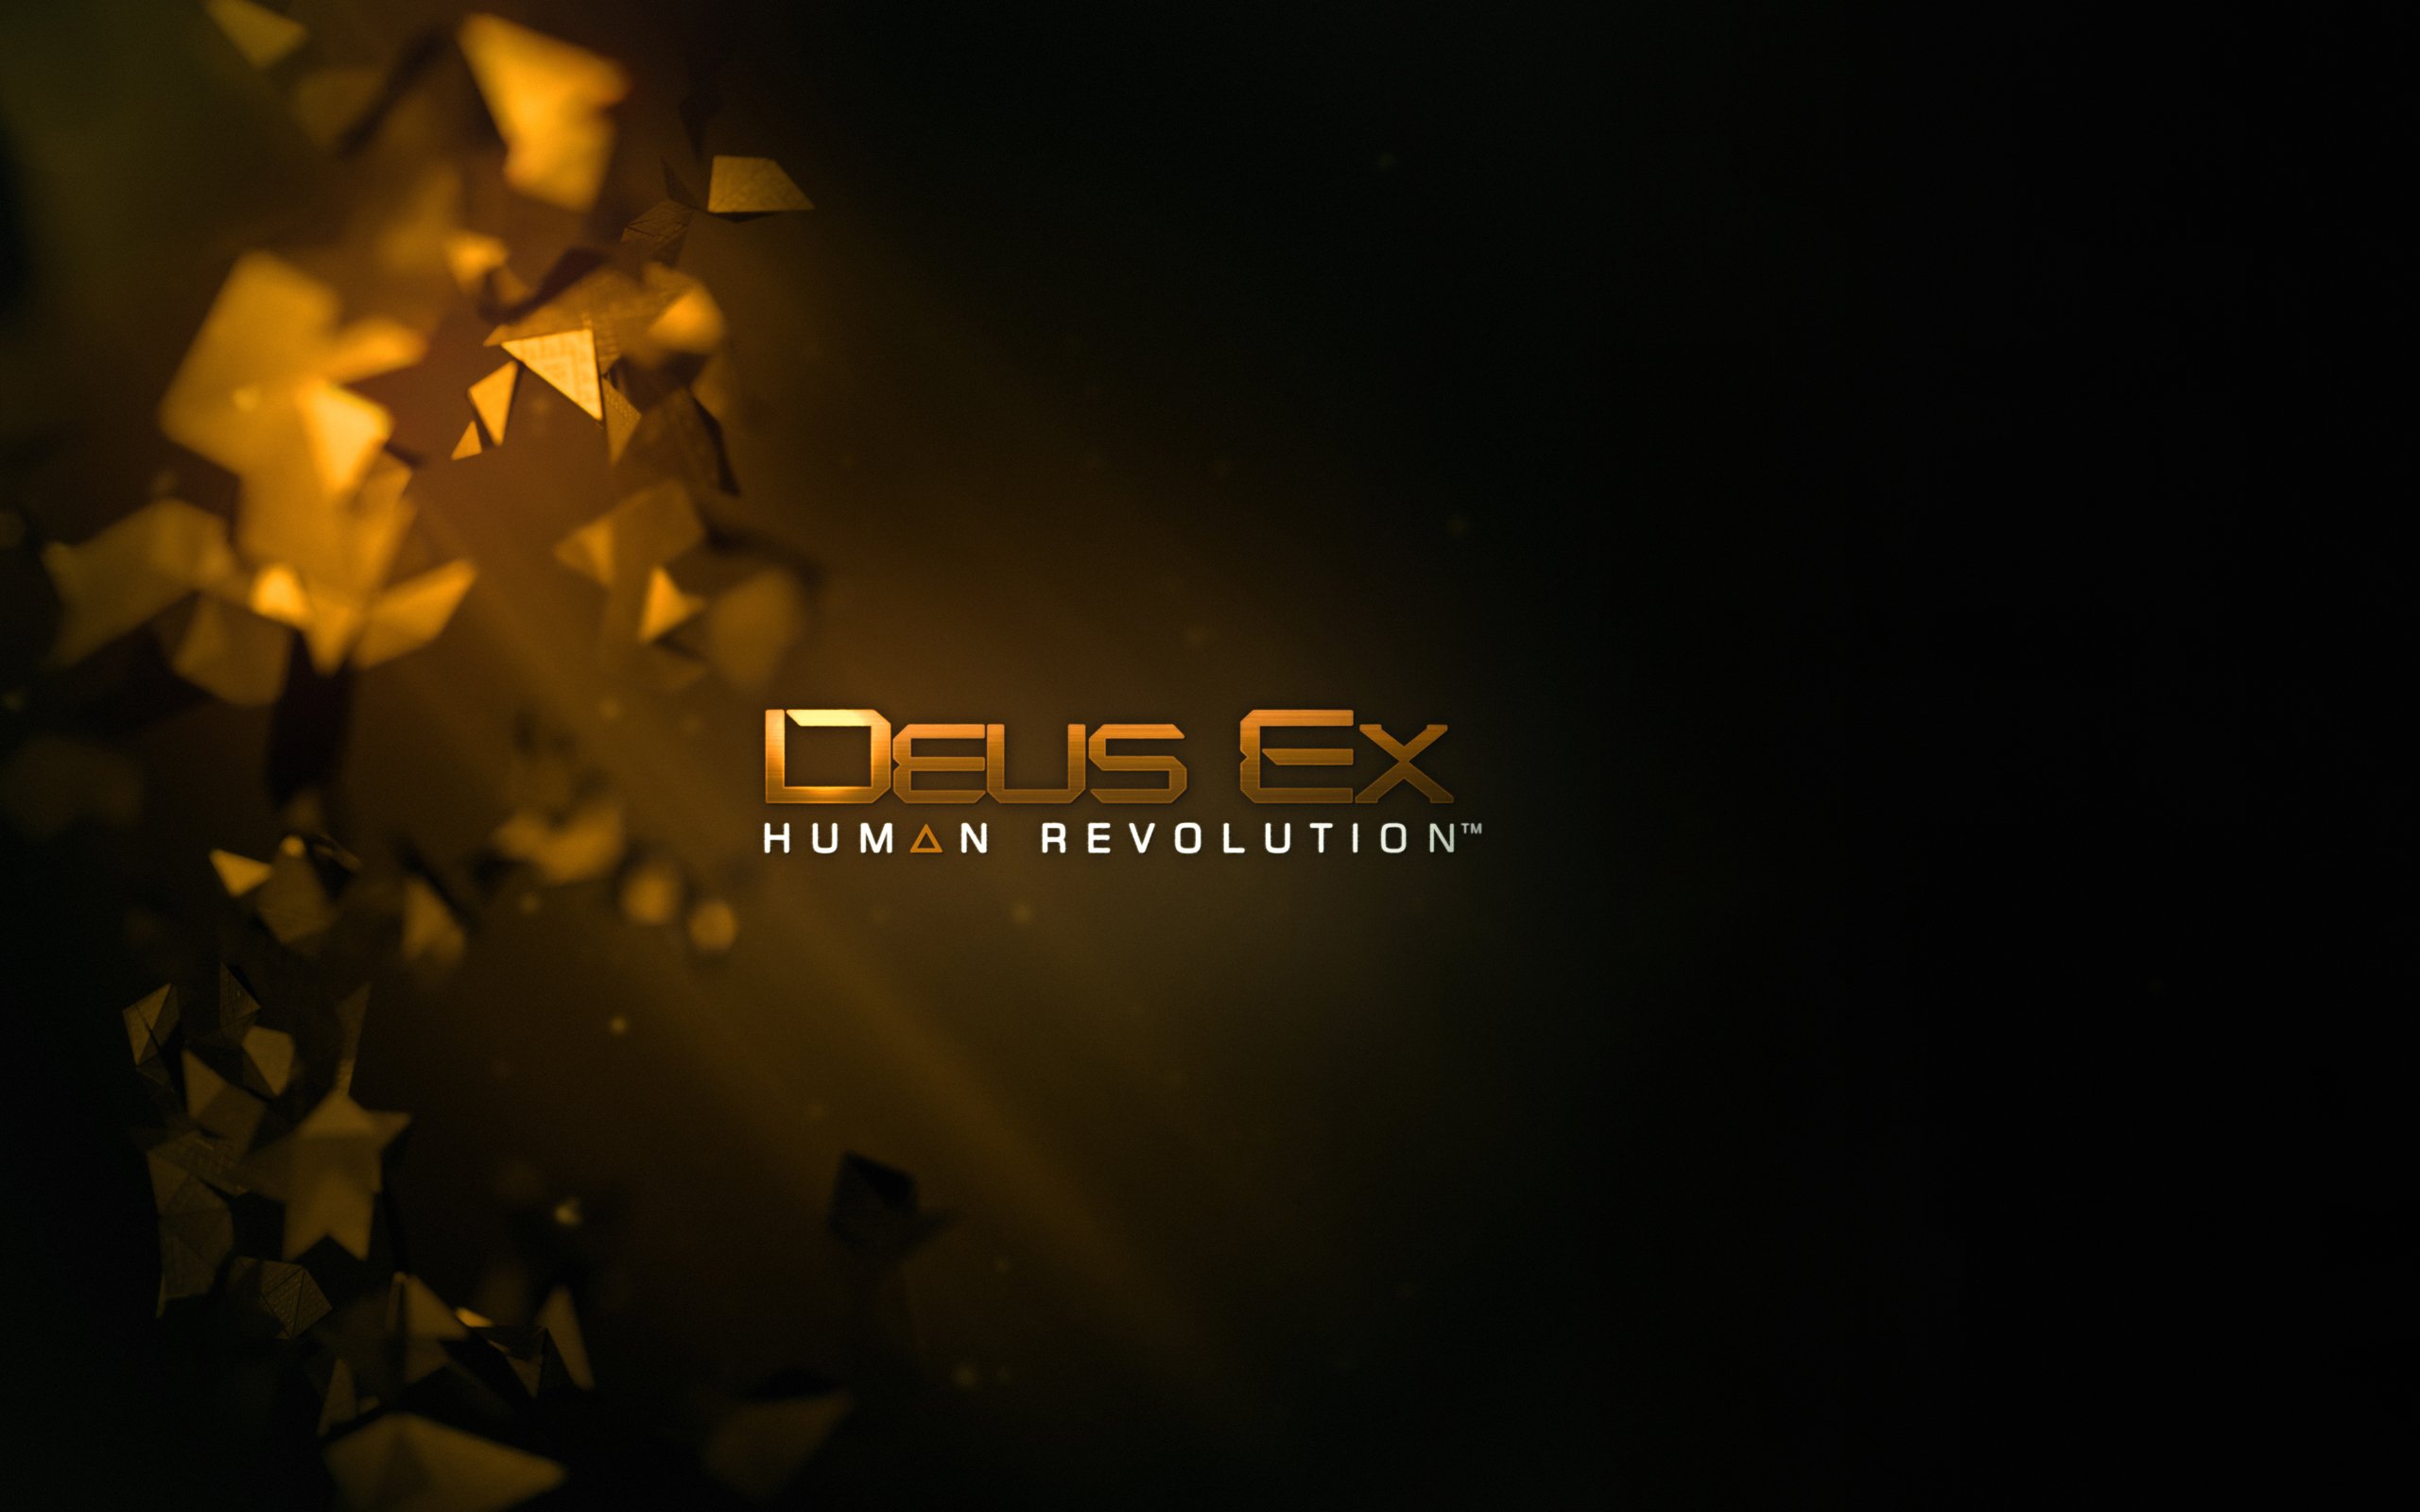 Deus Ex: Human Revolution Full HD Wallpaper and Background Image